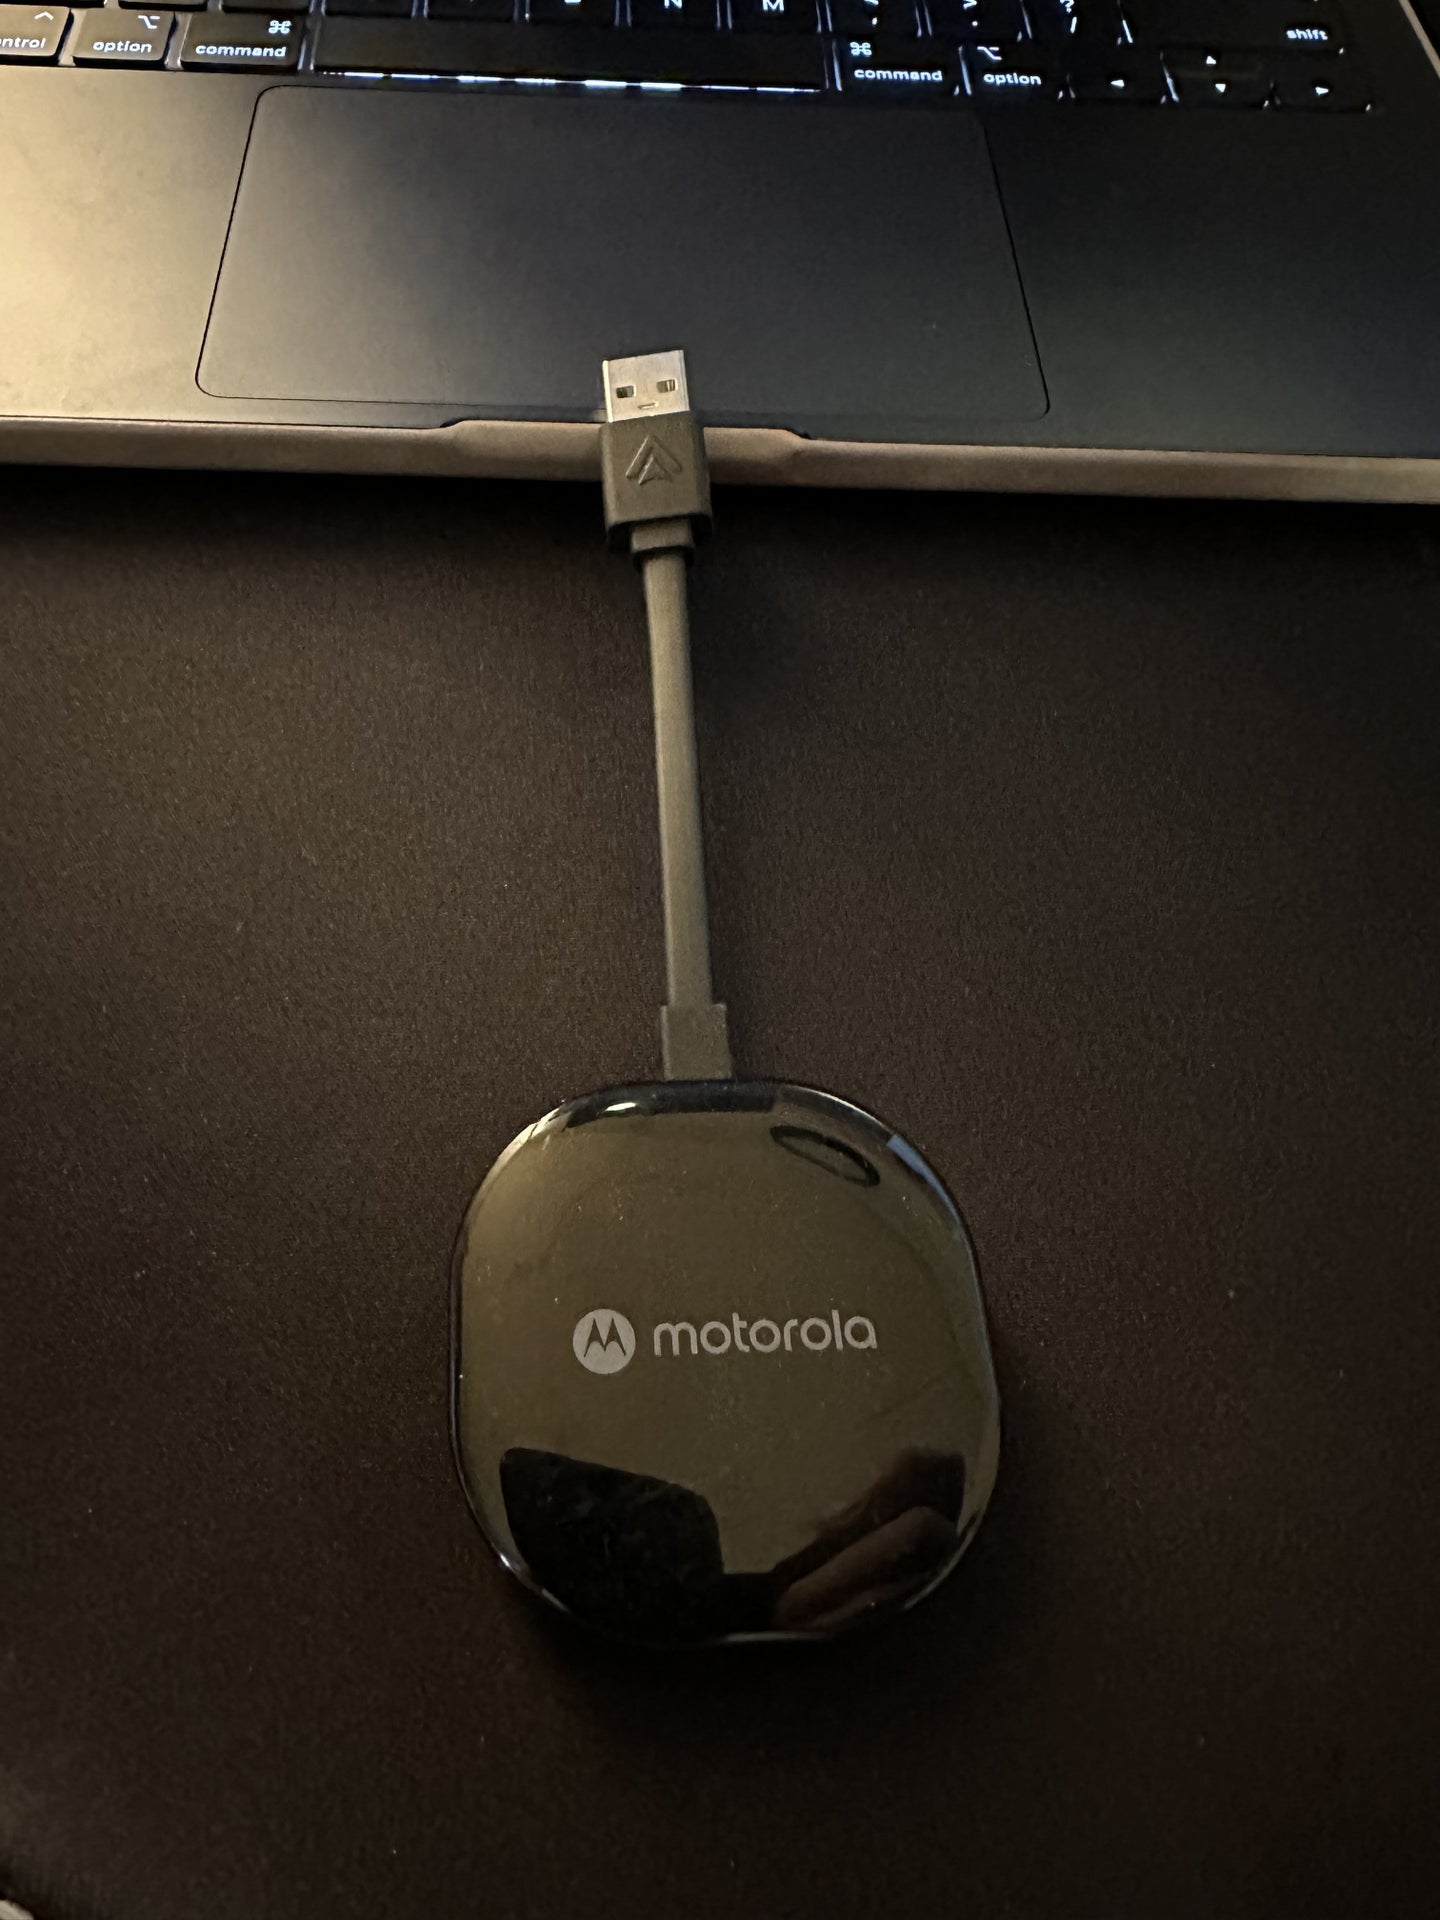 Motorola MA1 Wireless Android Auto Adapter